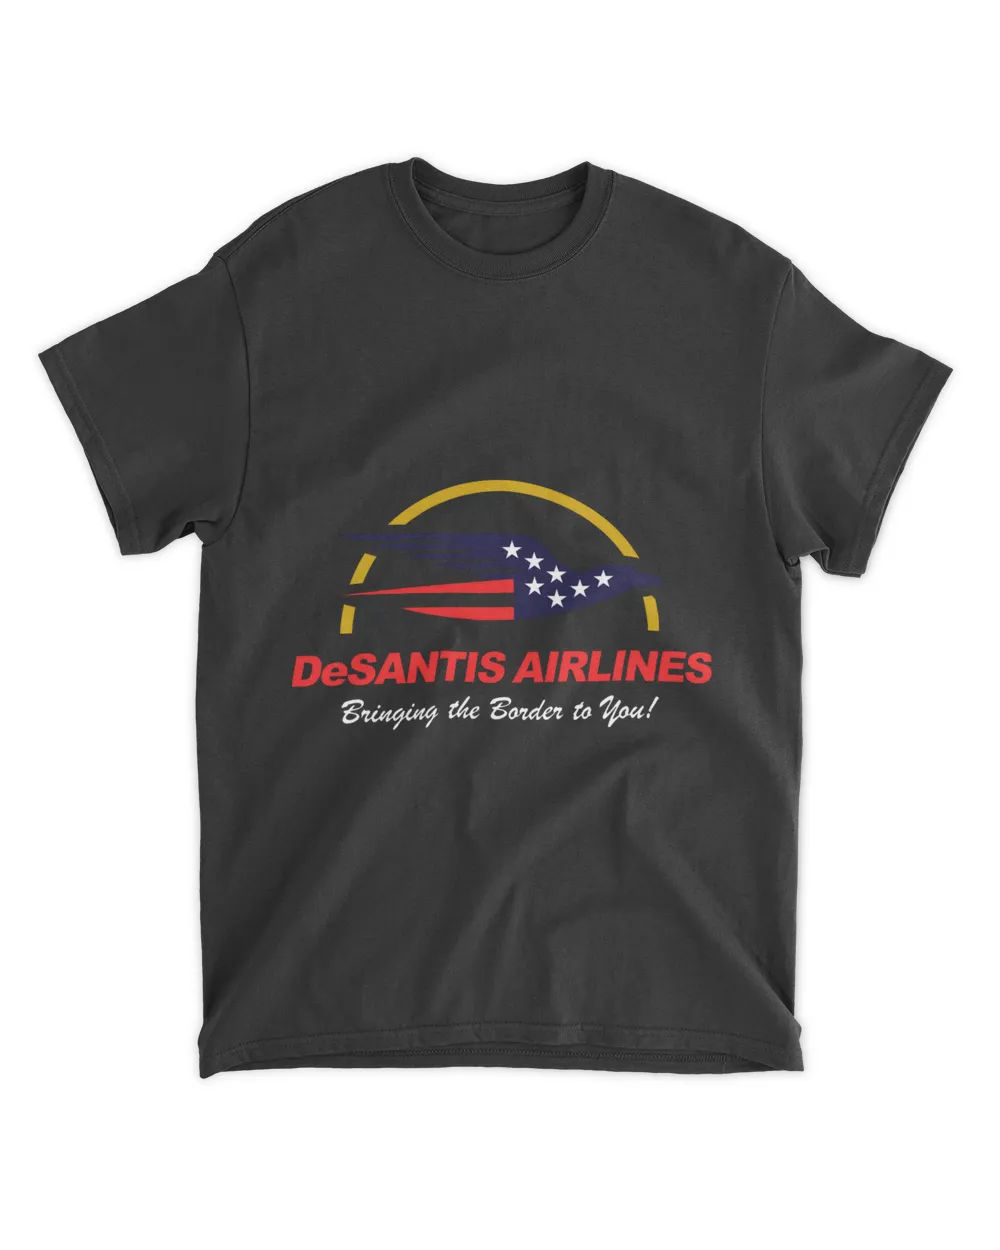 Desantis airlines bringing the border to you American flag eagle shirt 2022 official design